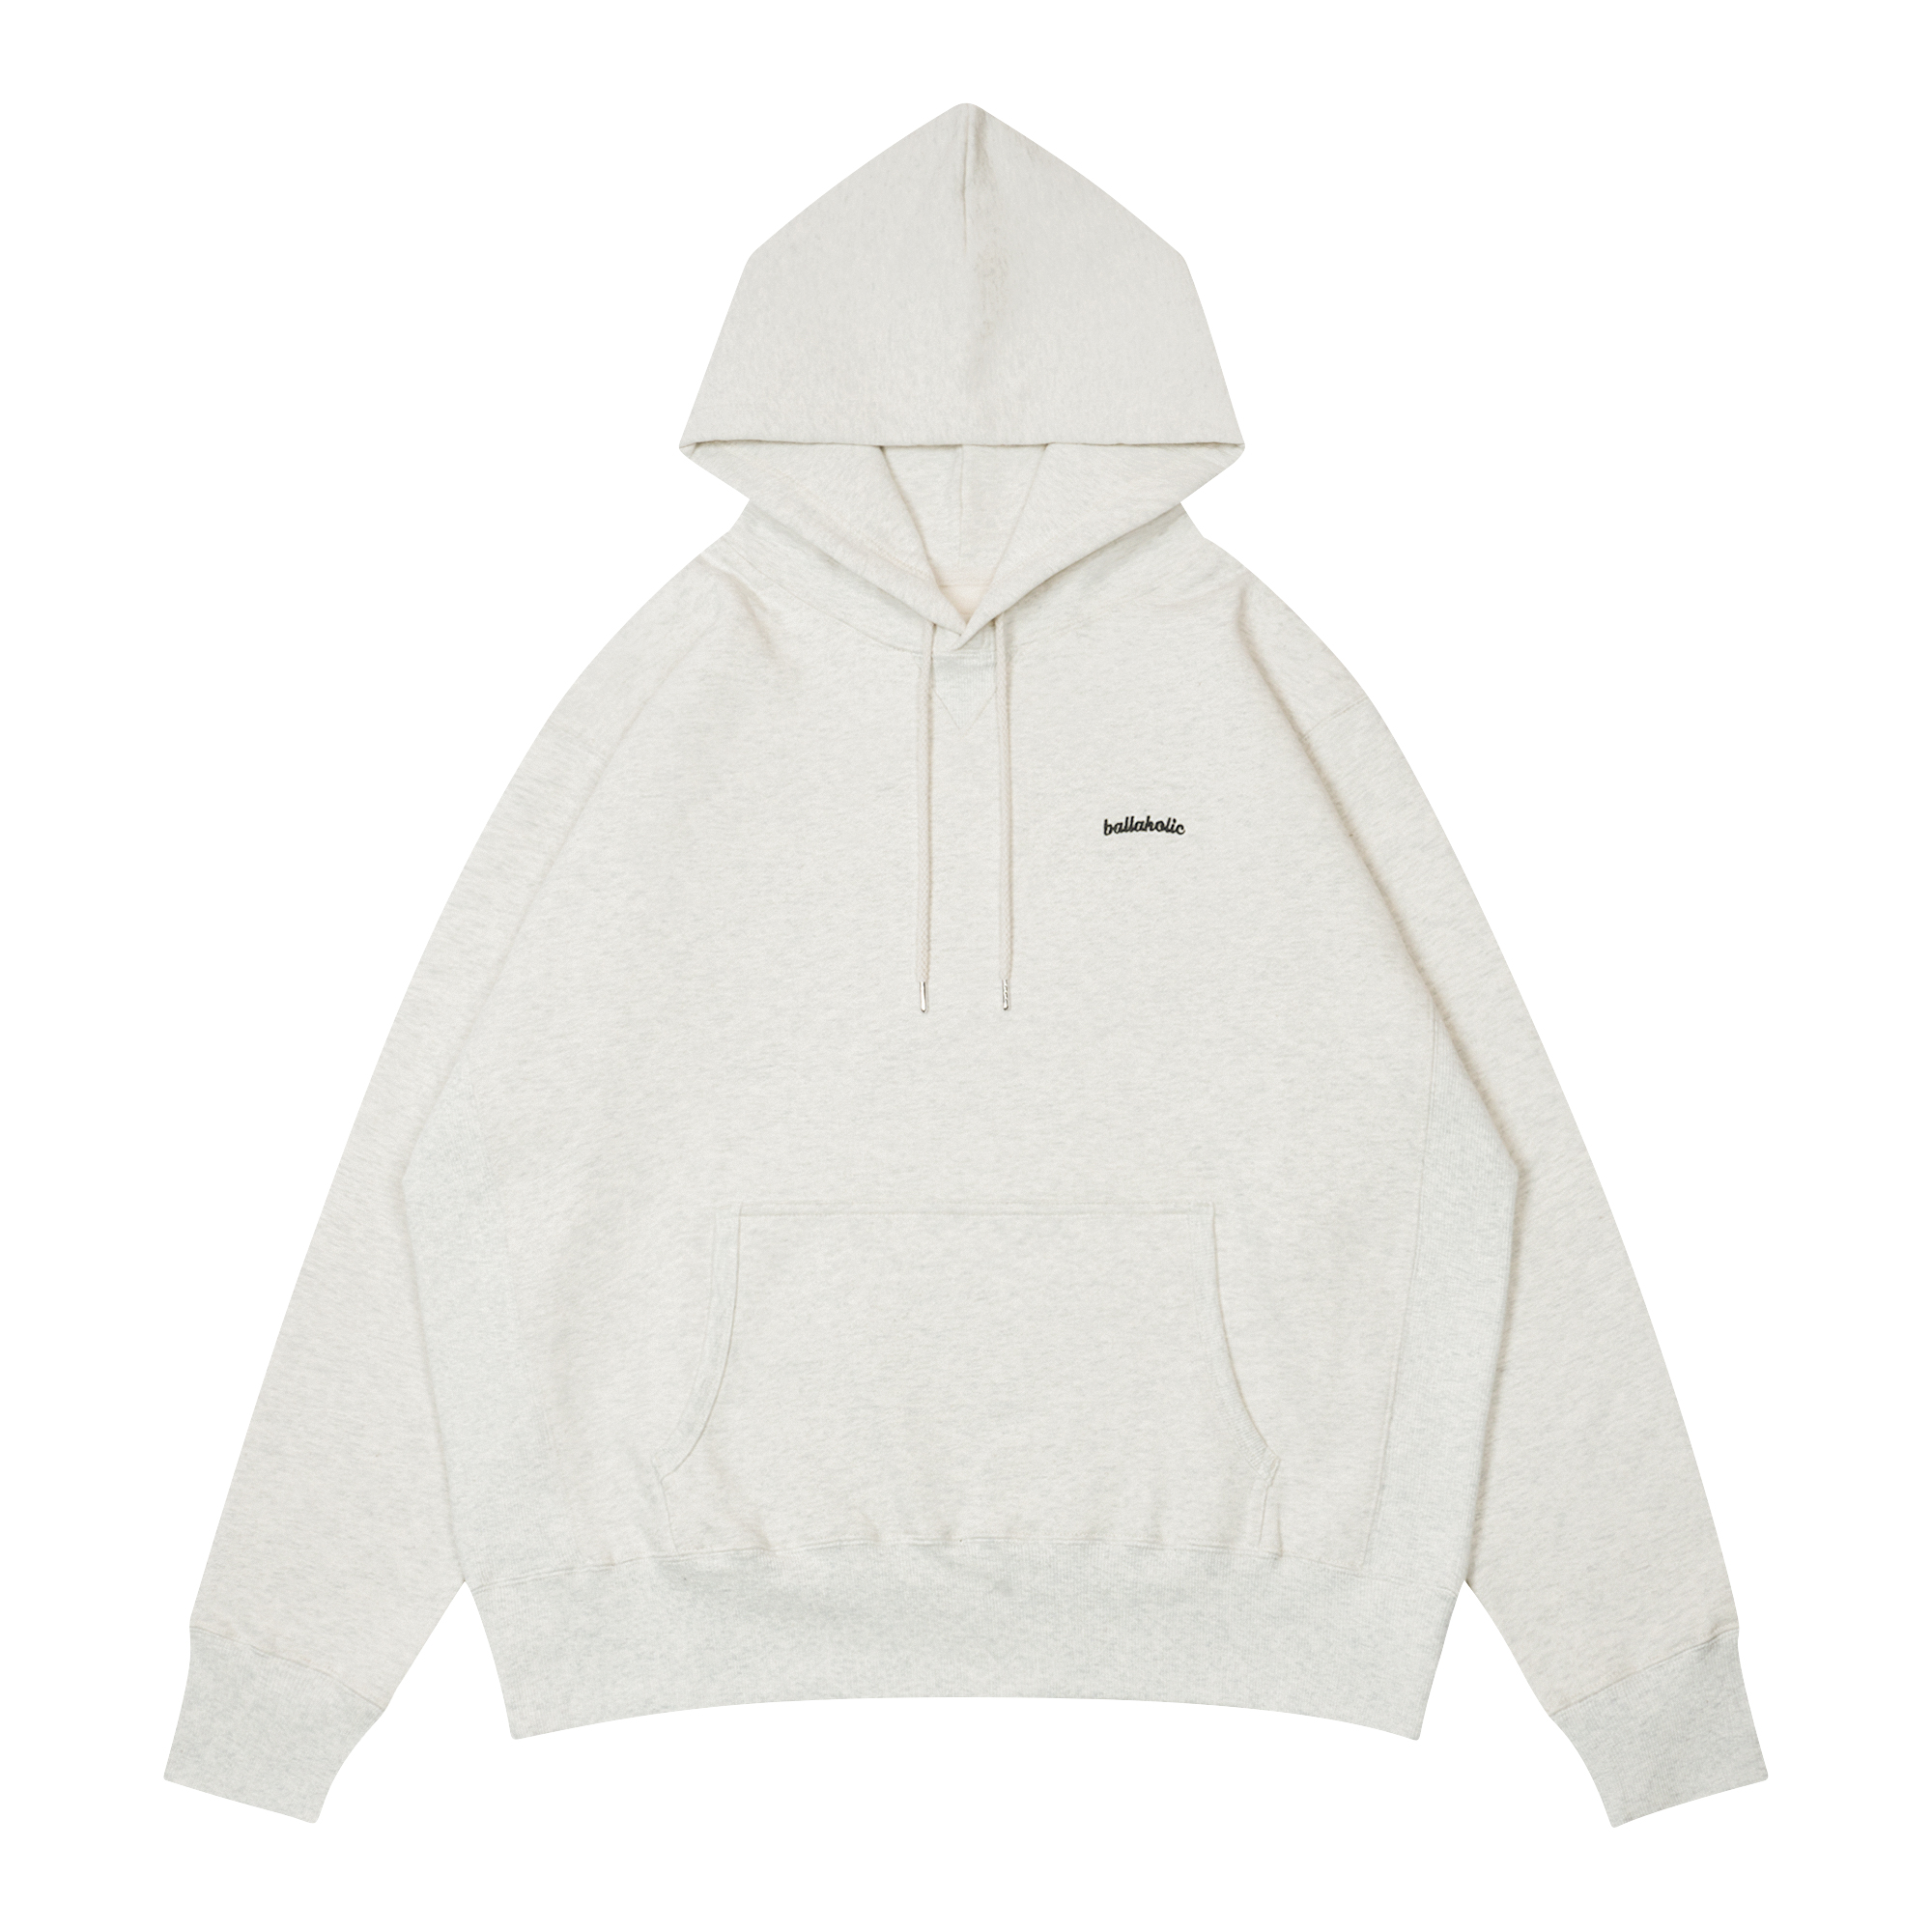 ballaholic small logo hoodie